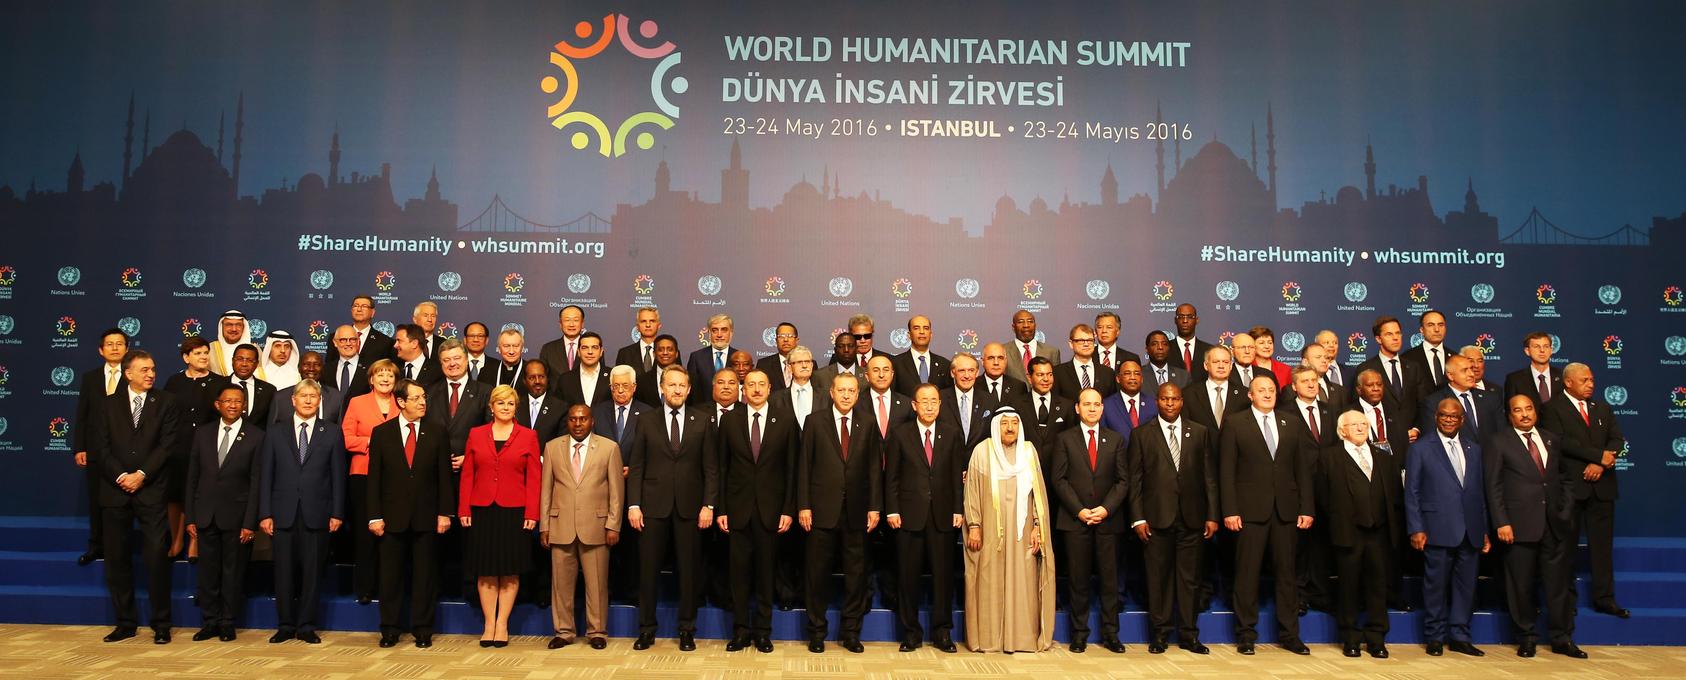 World-Humatitarian-Summit-Flickr